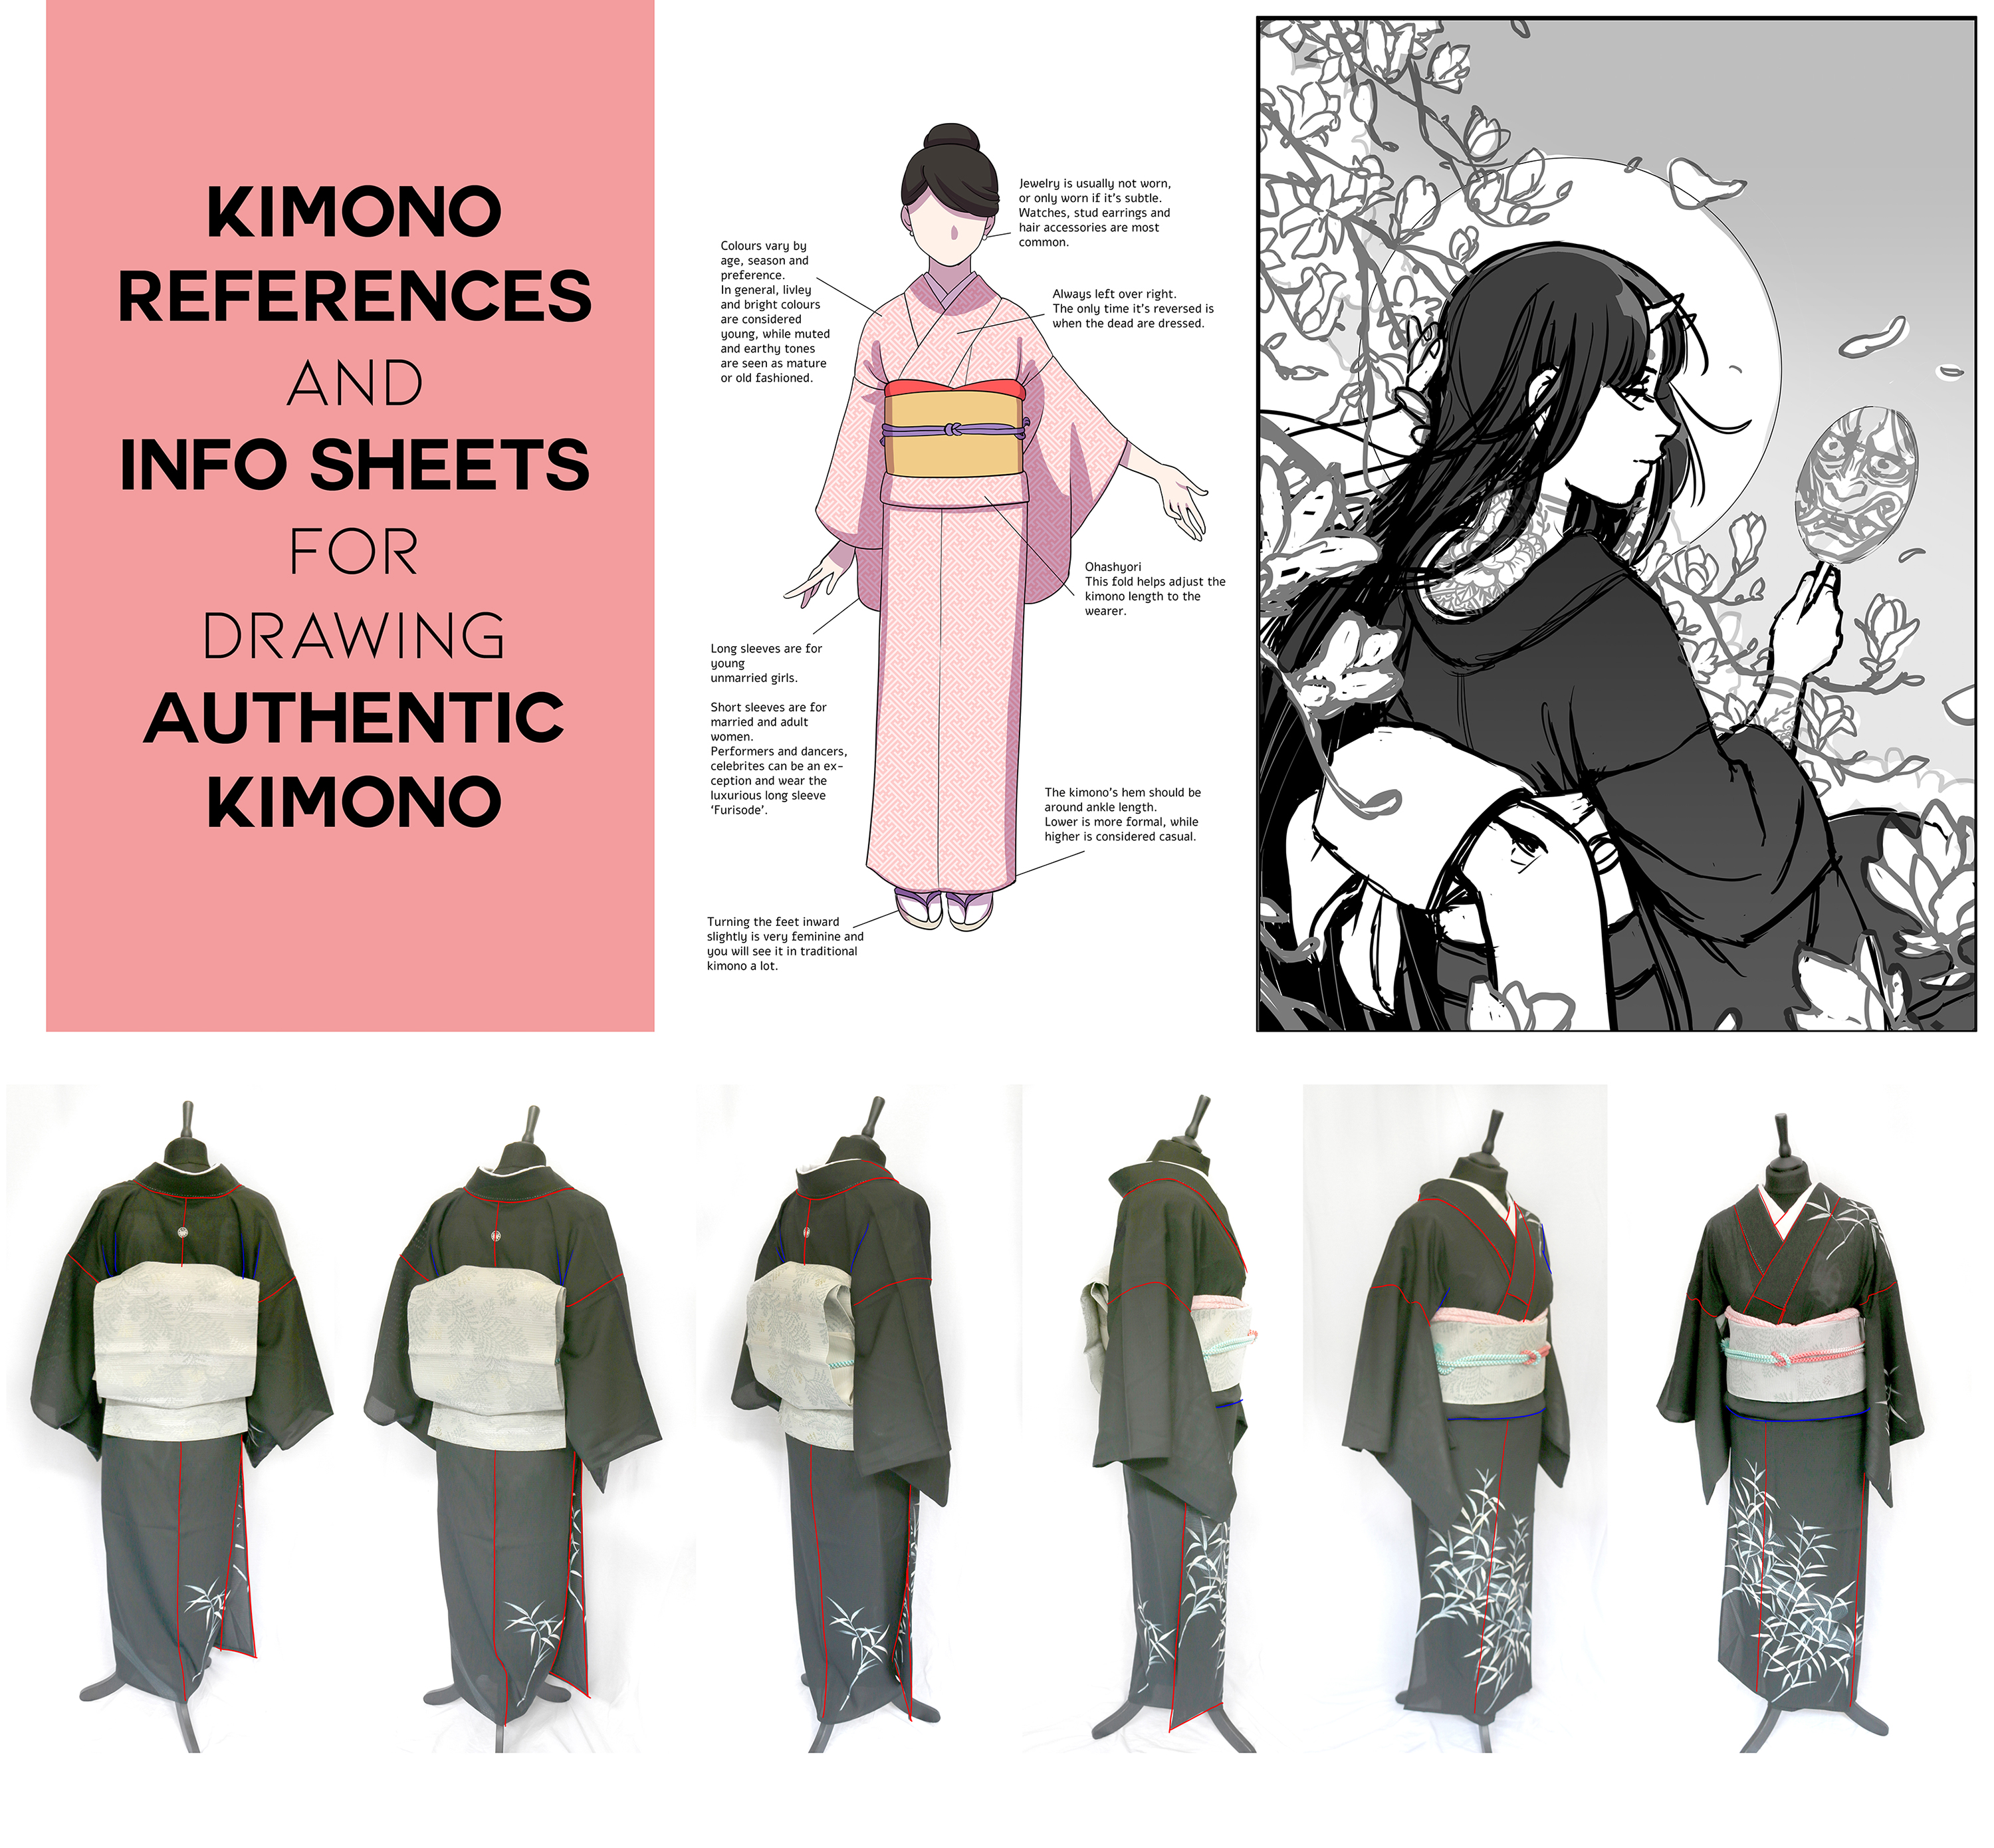 Kids hooded top with kimono sleeve flat sketch Vector Image